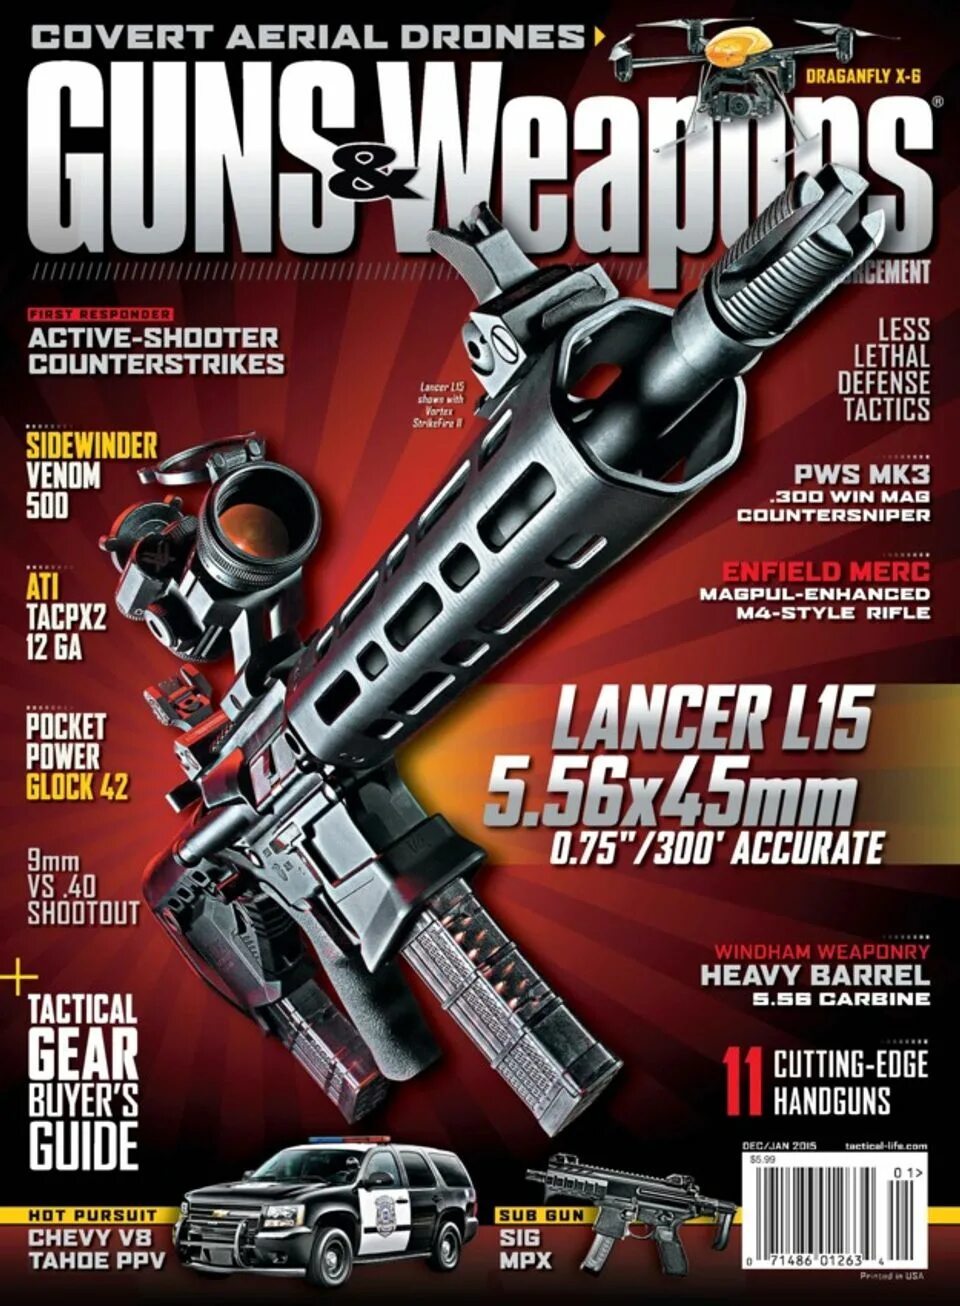 Lethal company guns. Журнал оружие. Обложка журнала про оружие. Журнал оружие 1996.